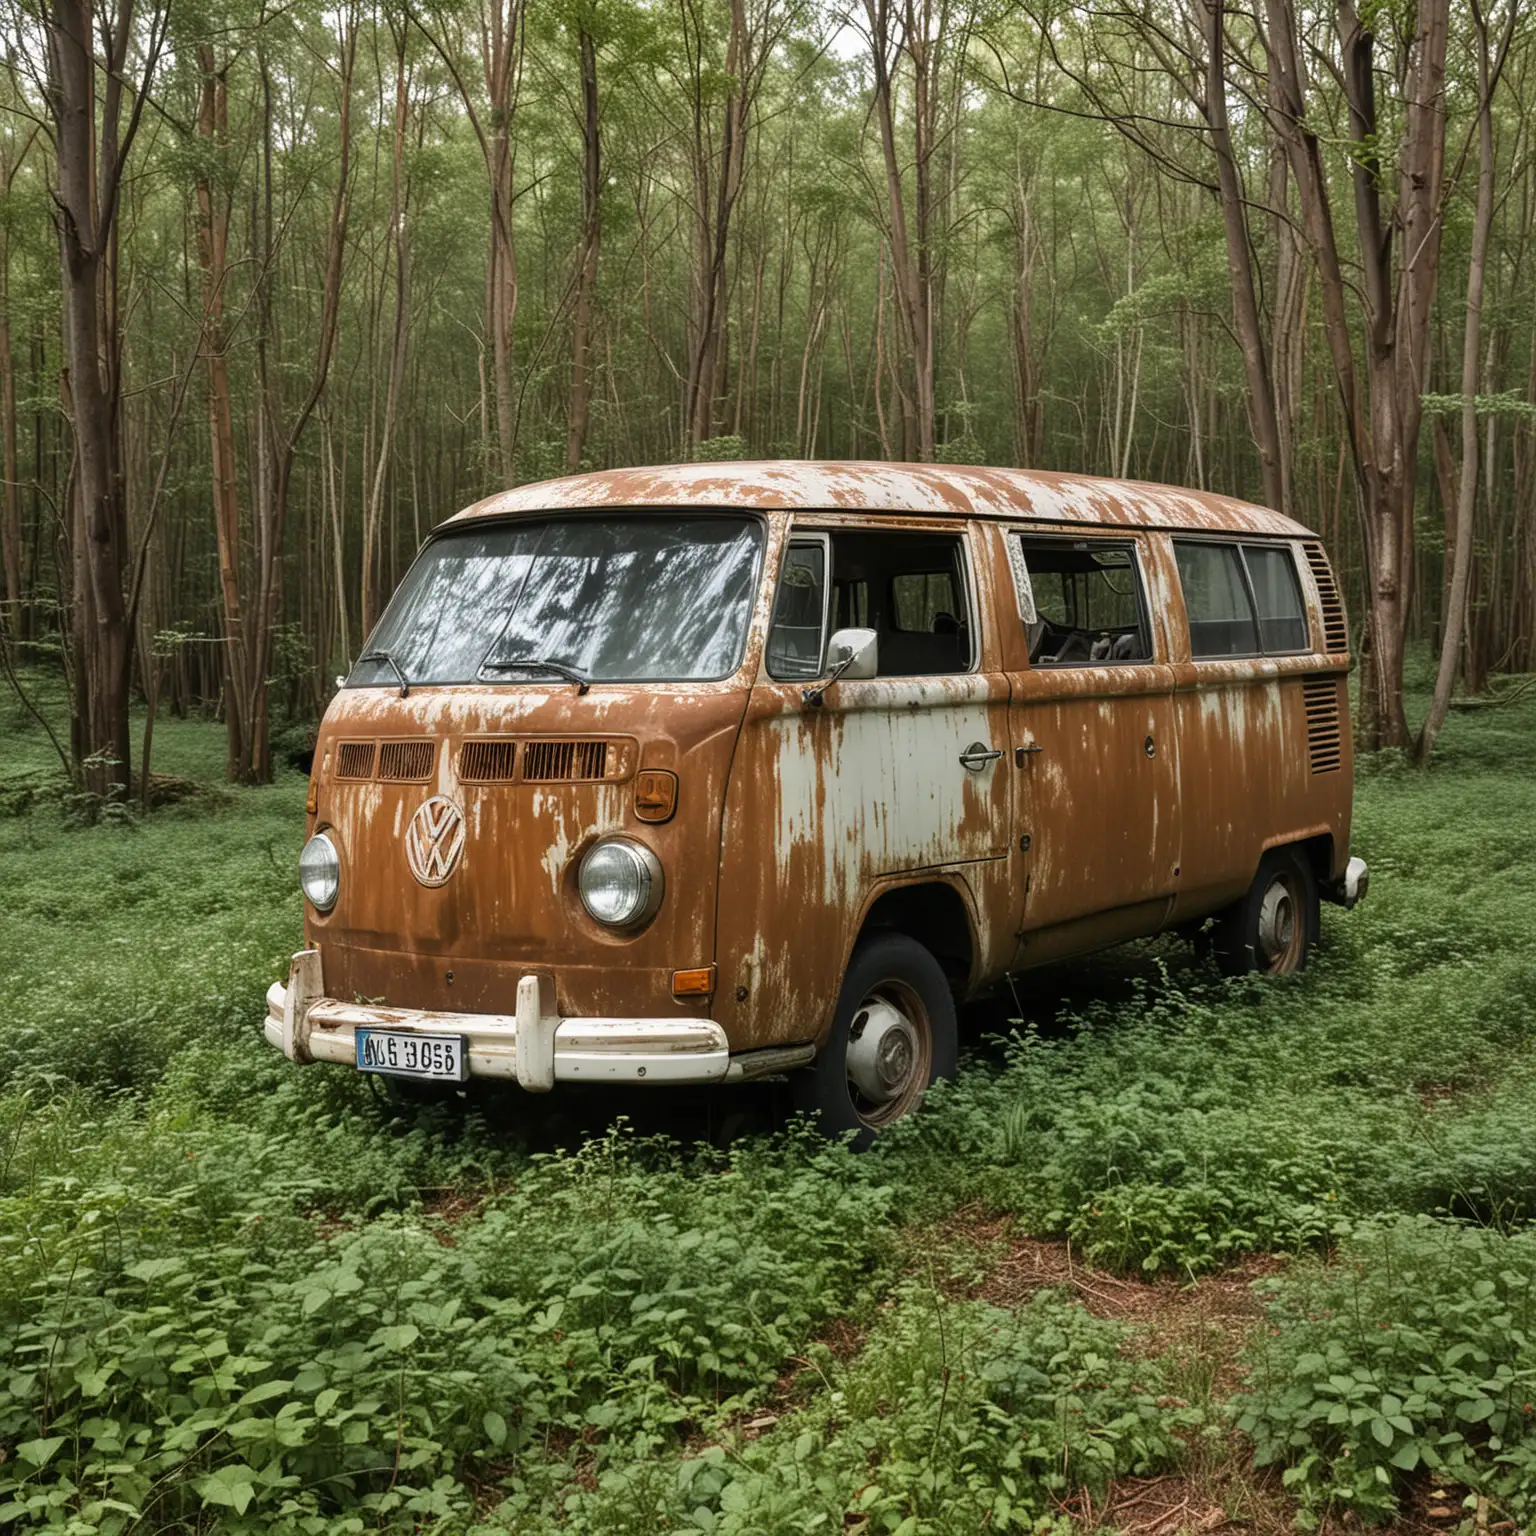 Abandoned-1966-Volkswagen-Transporter-in-Overgrown-Landscape